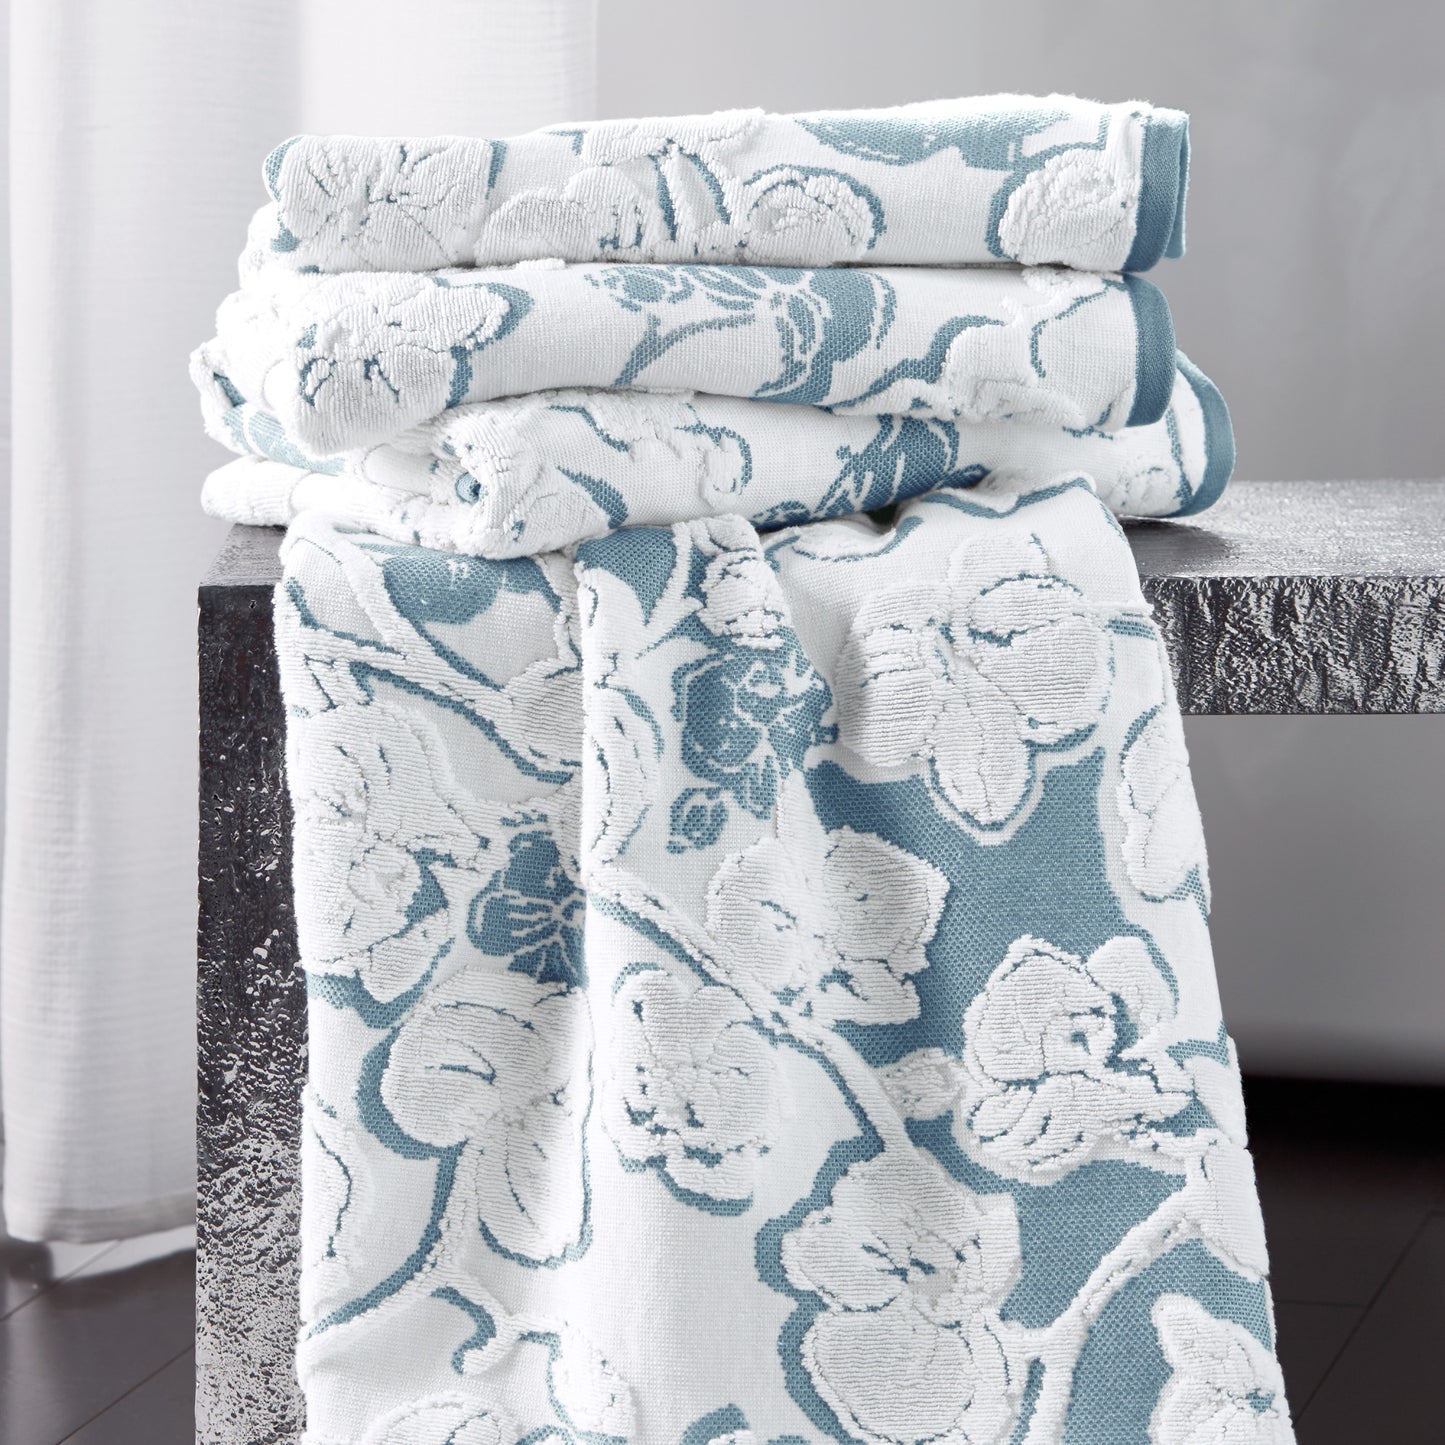 Michael Aram Orchid Towels